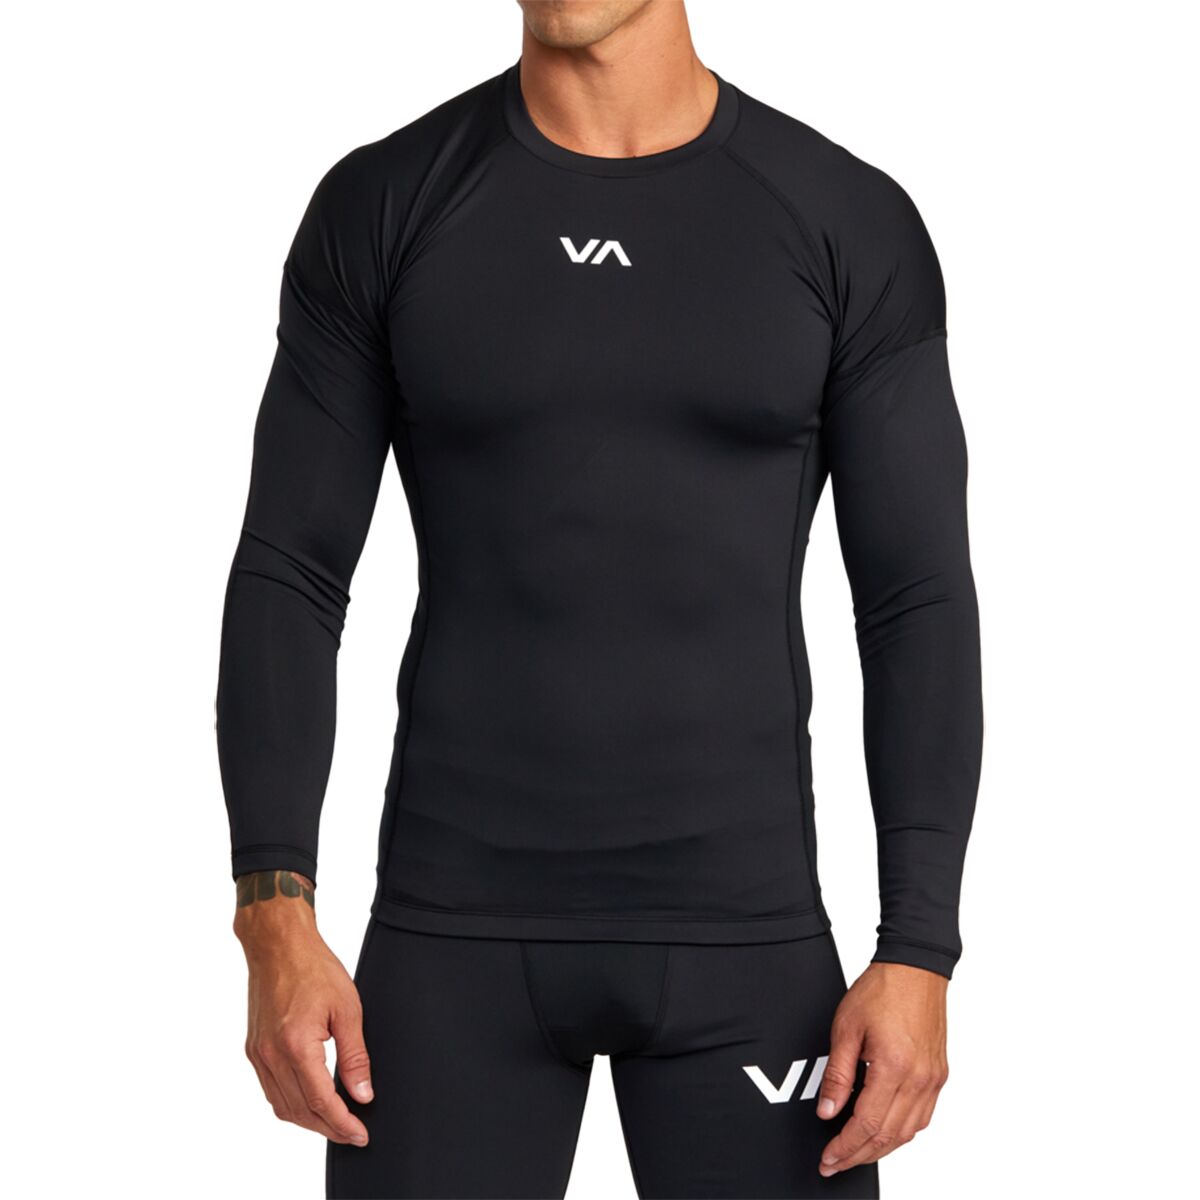 RVCA Compression Long-Sleeve Shirt - Men's